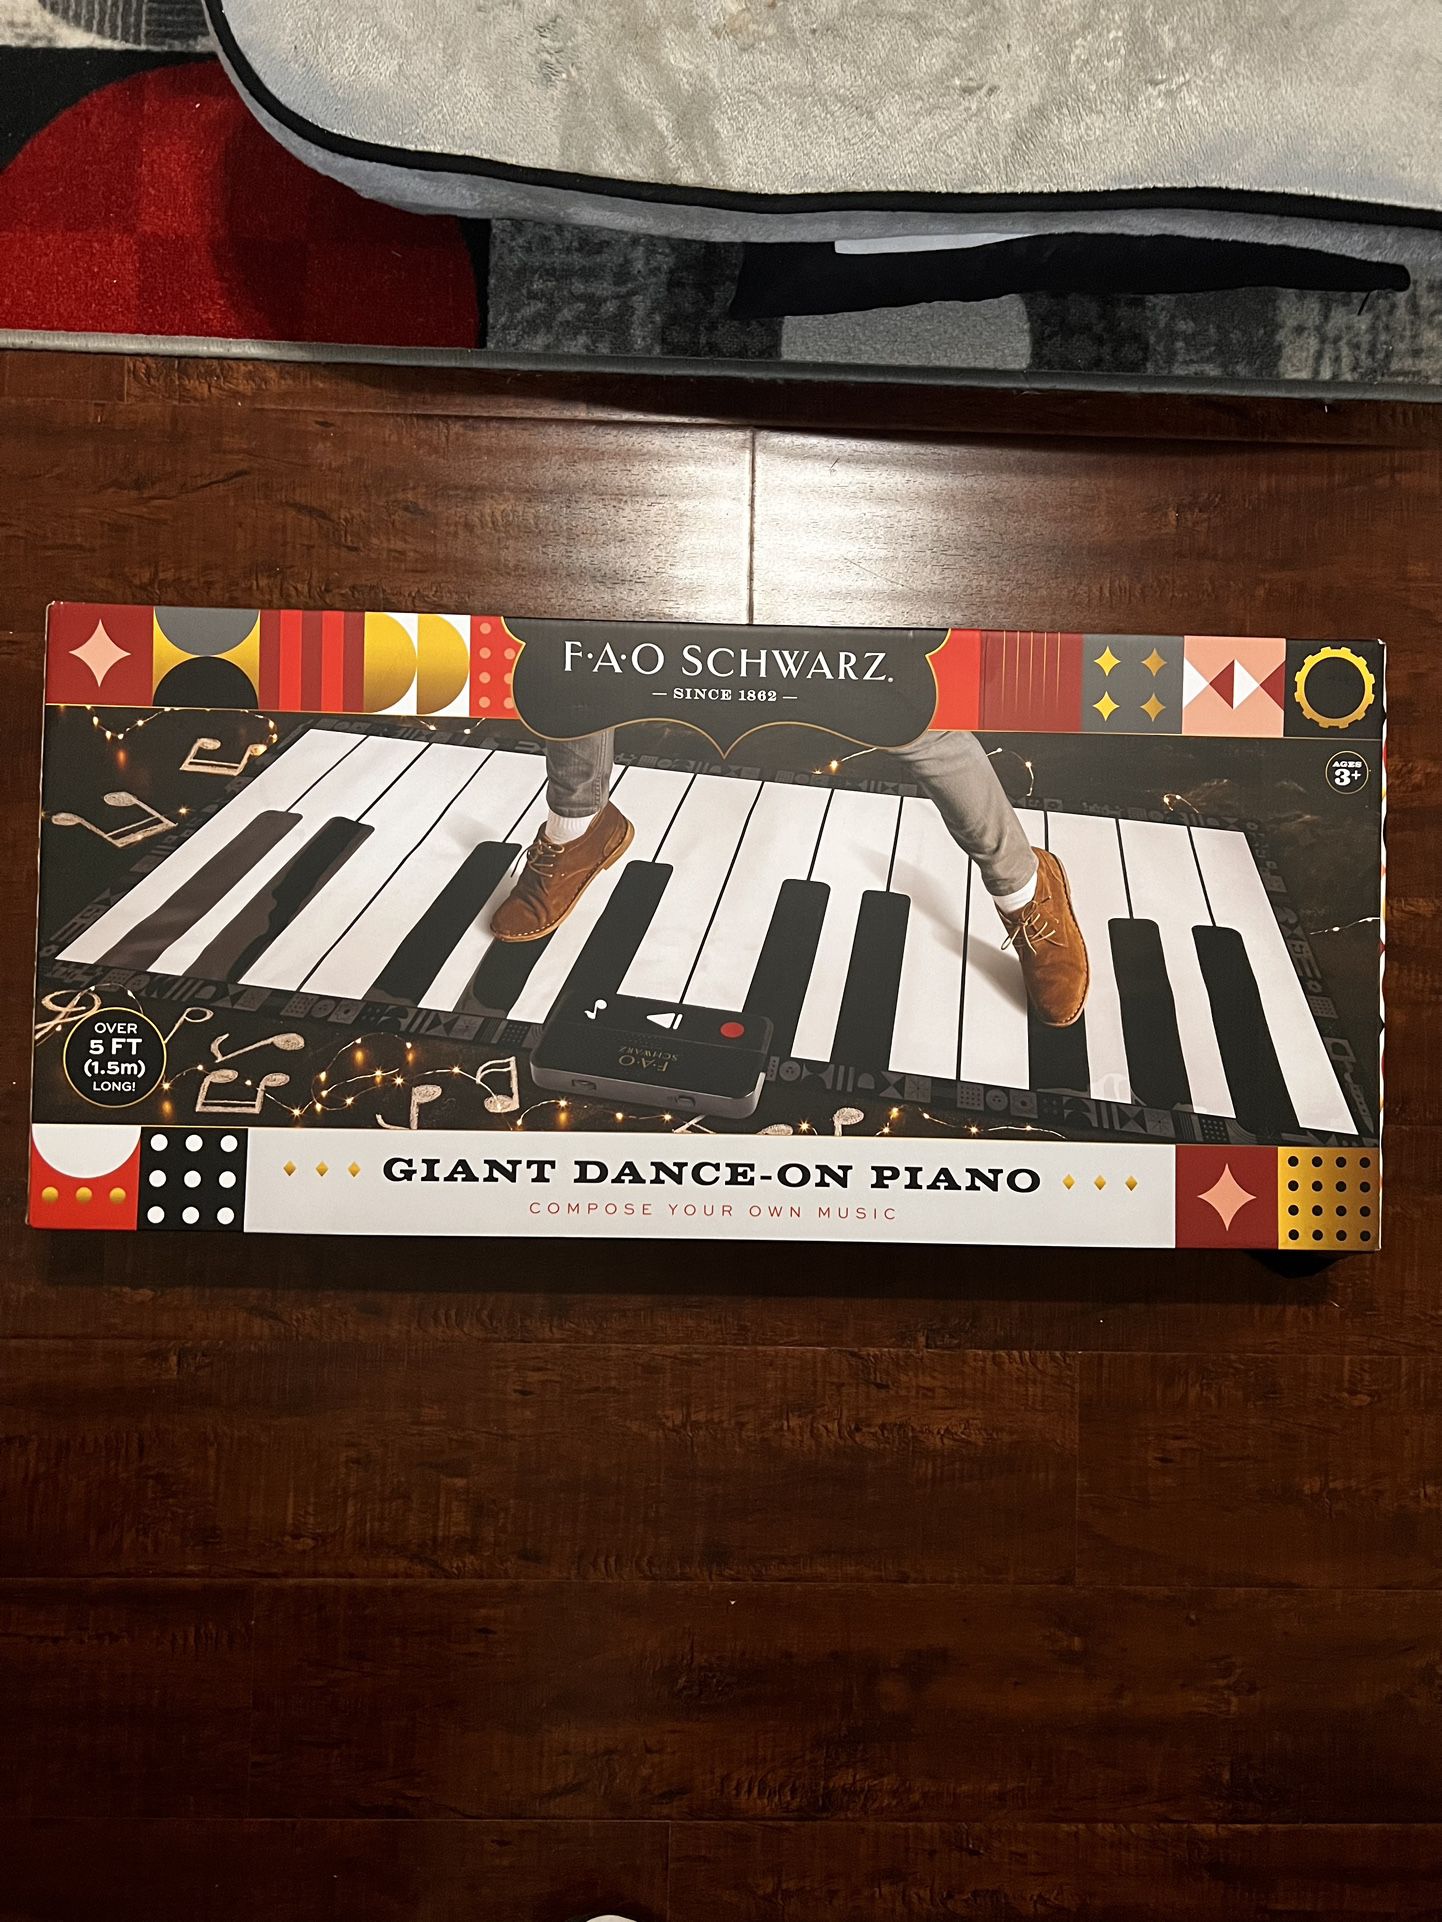 Giant Dance-On Piano